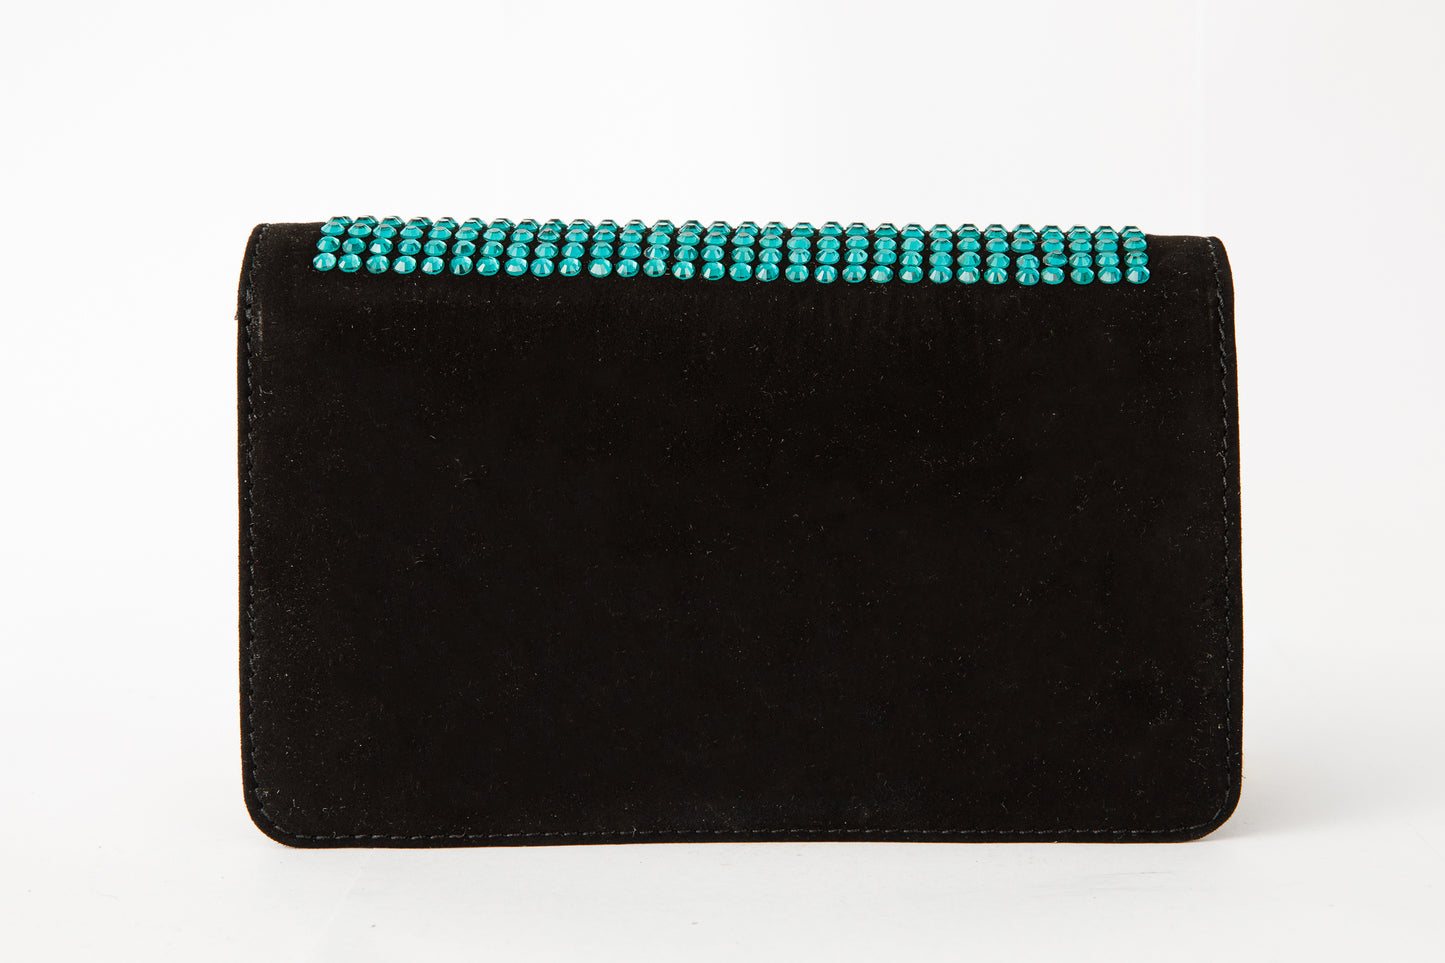 The Ailano Black Leather Glitter Handbag